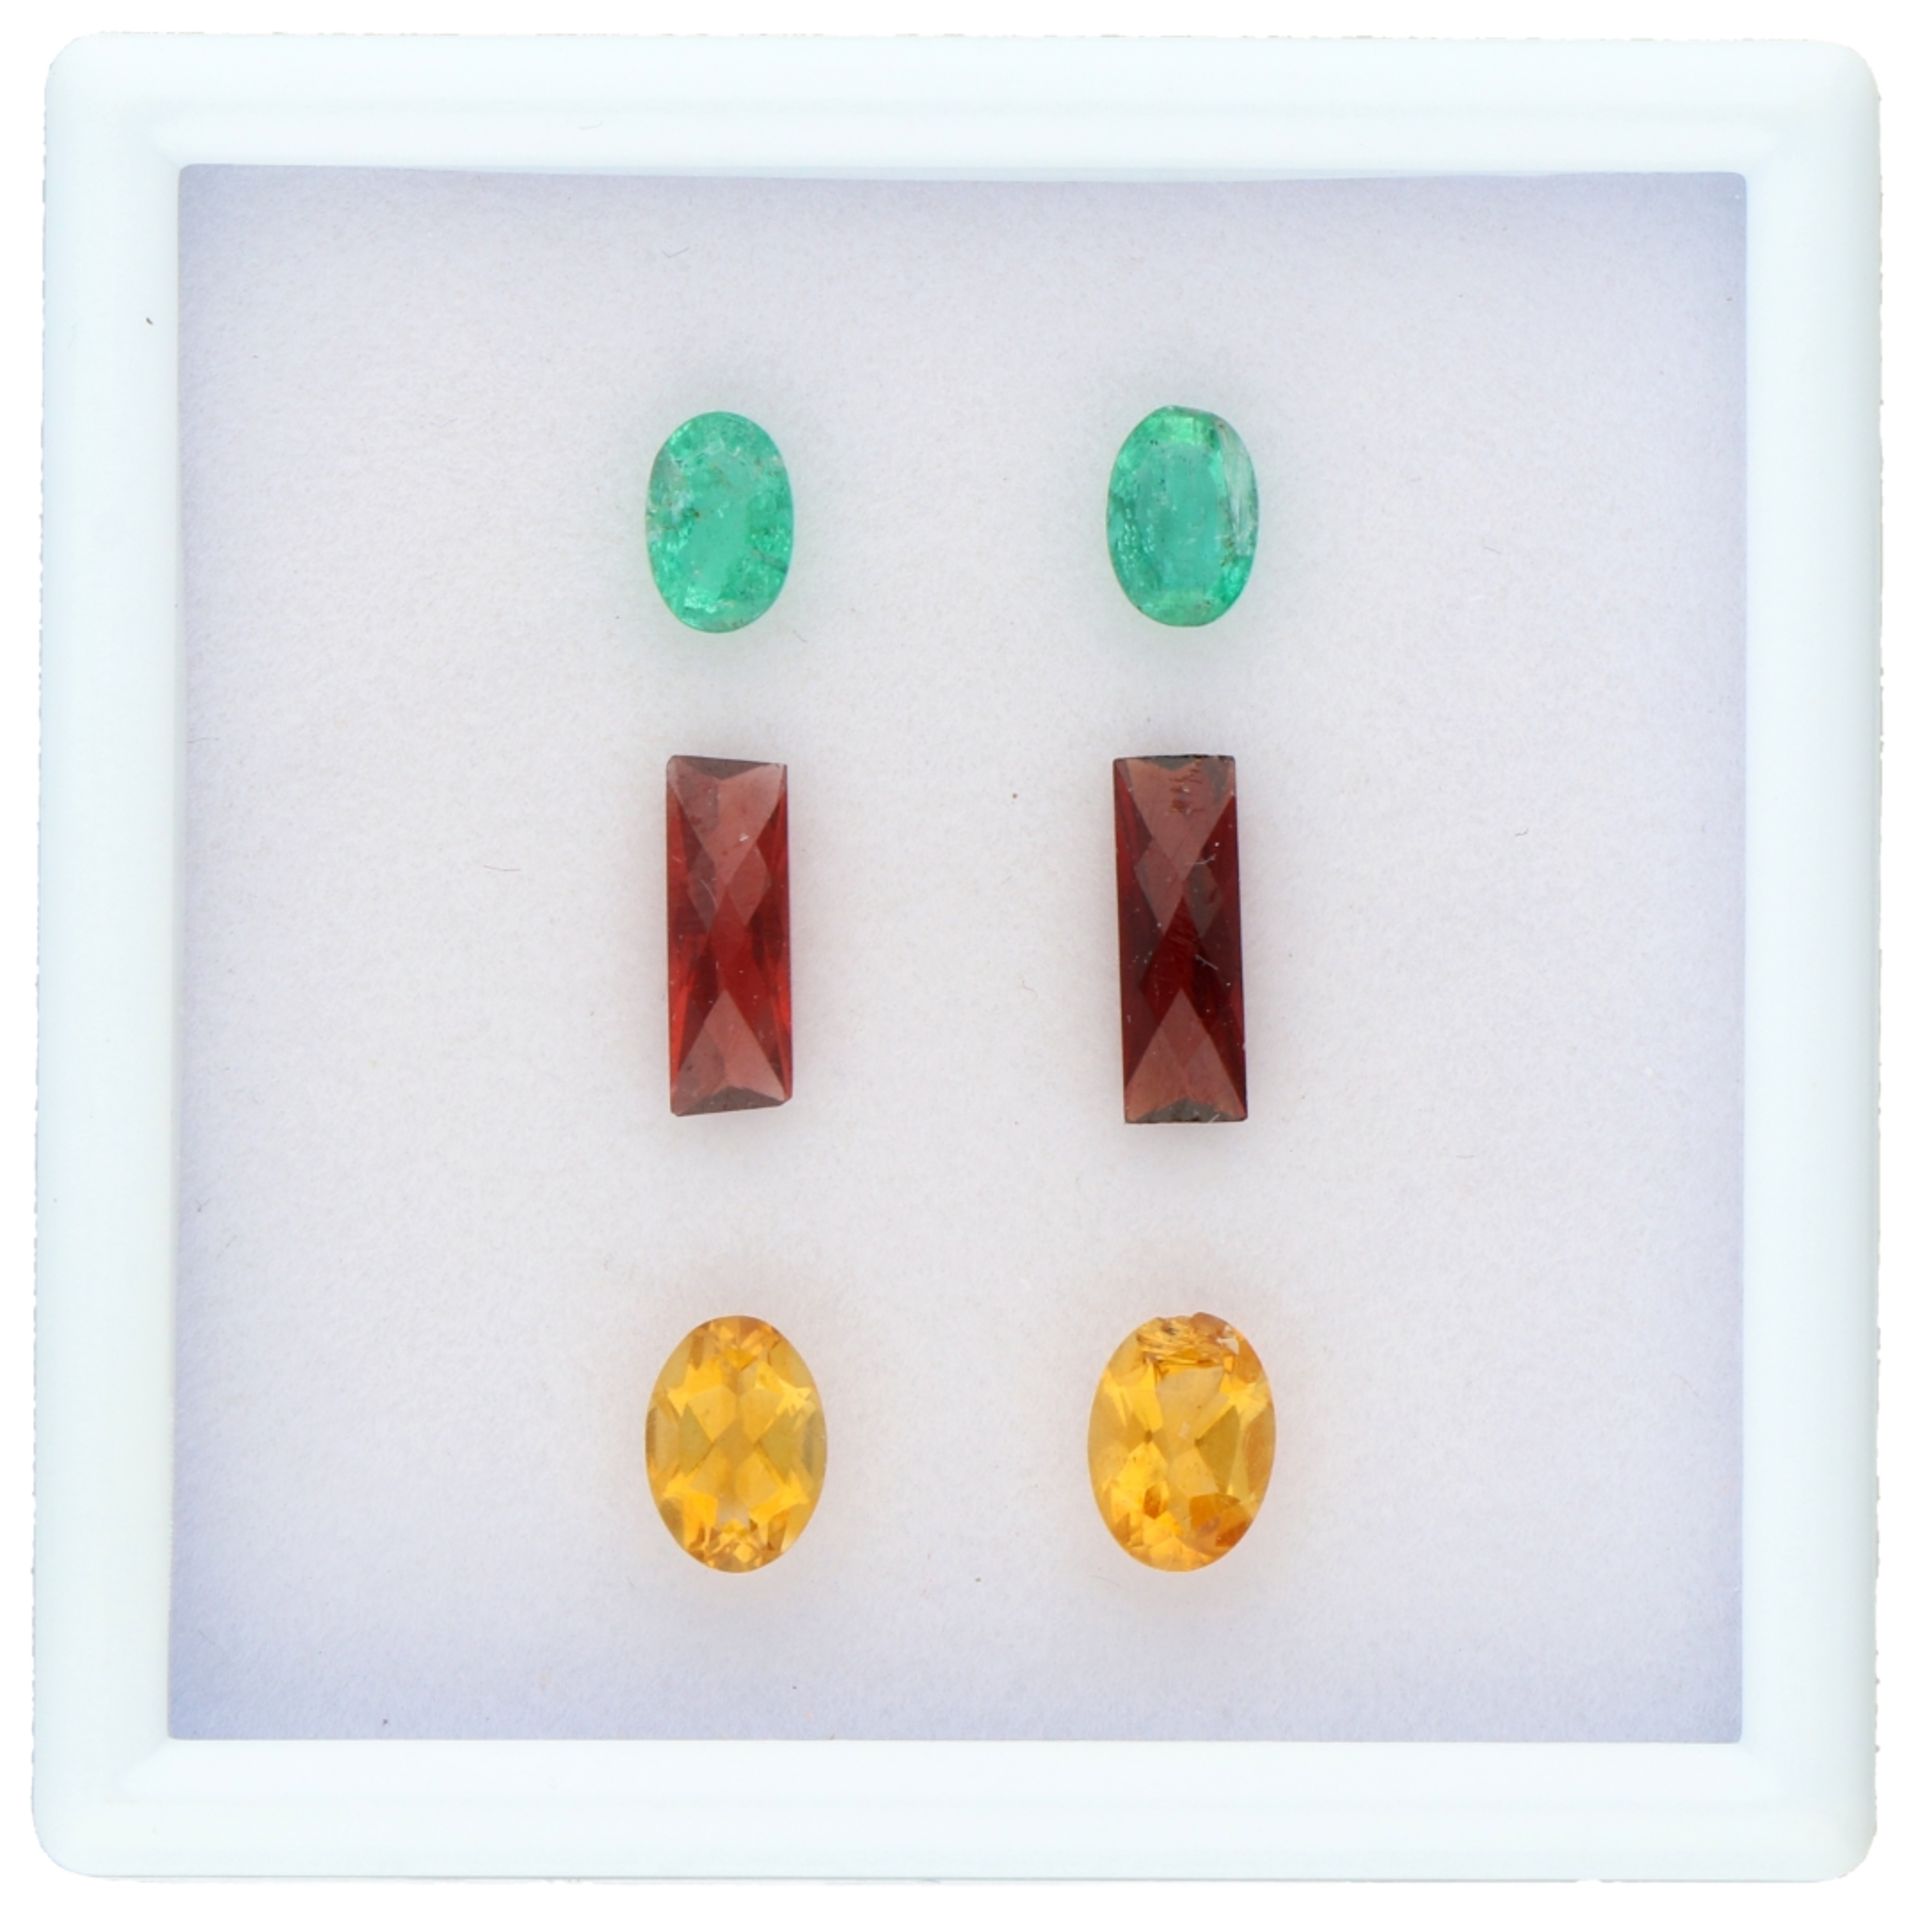 No Reserve - Lot of six natural gemstones consisting of emerald, citrine and garnet.